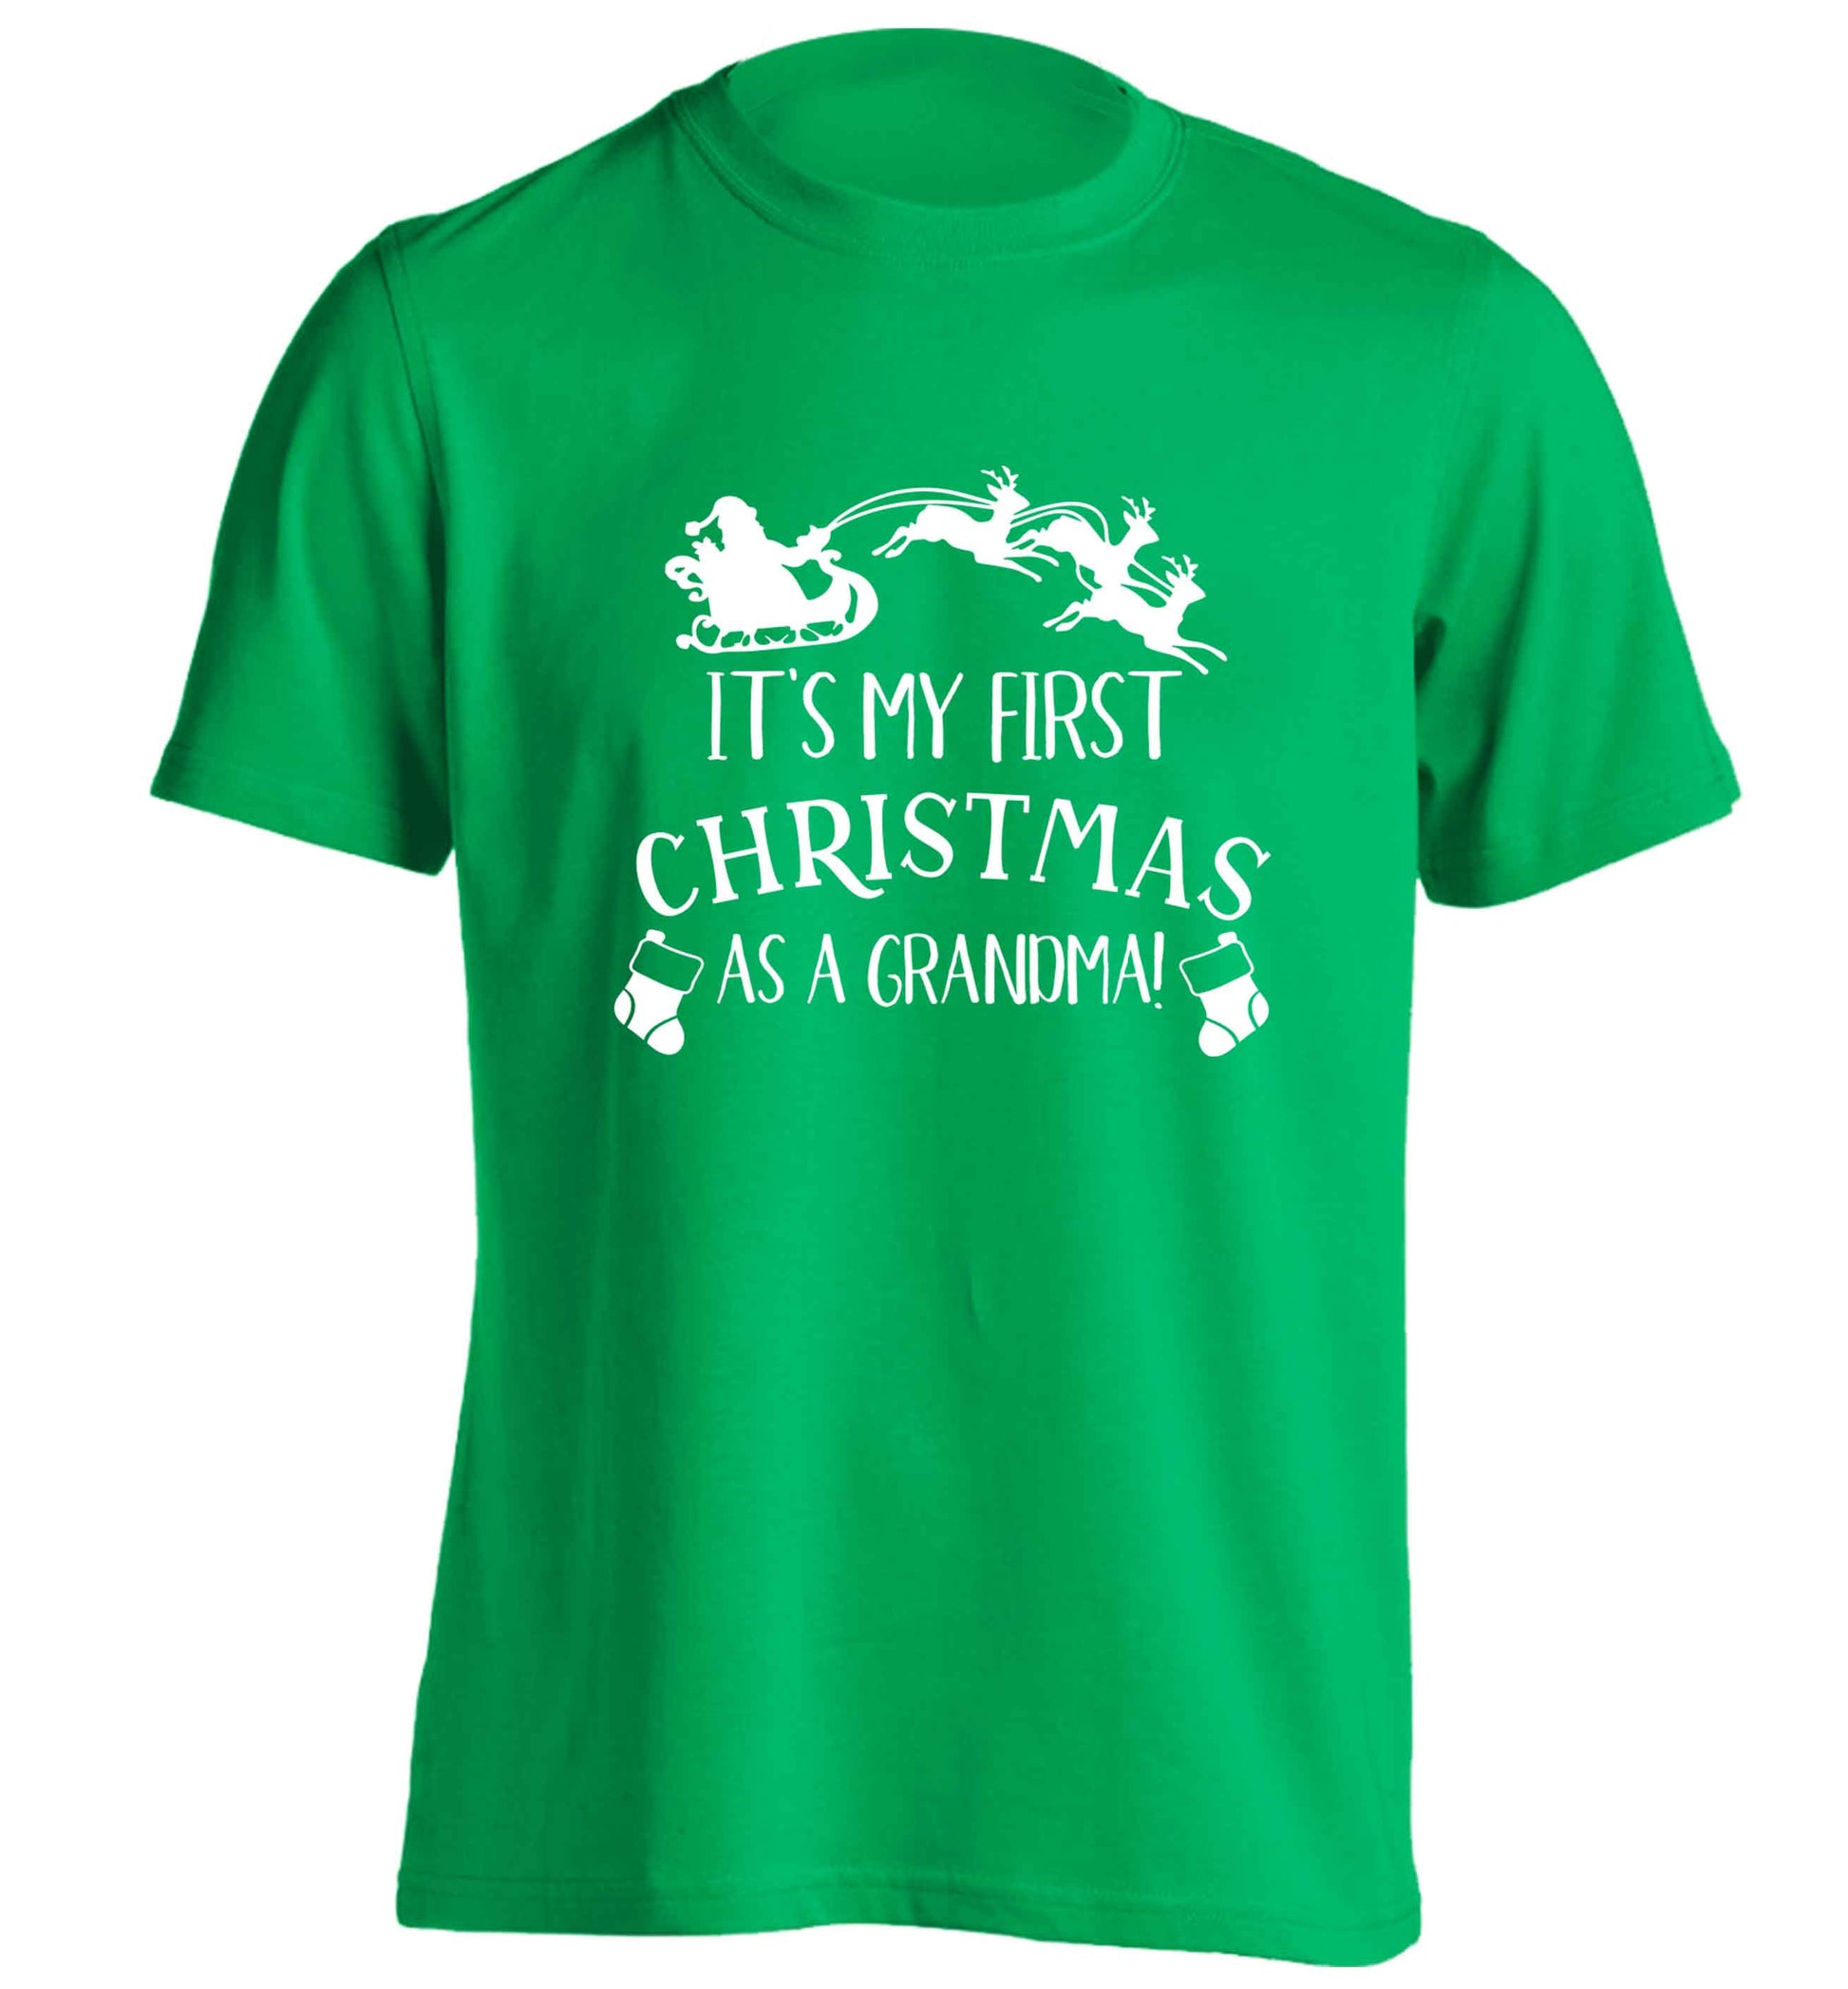 It's my first Christmas as a grandma! adults unisex green Tshirt 2XL